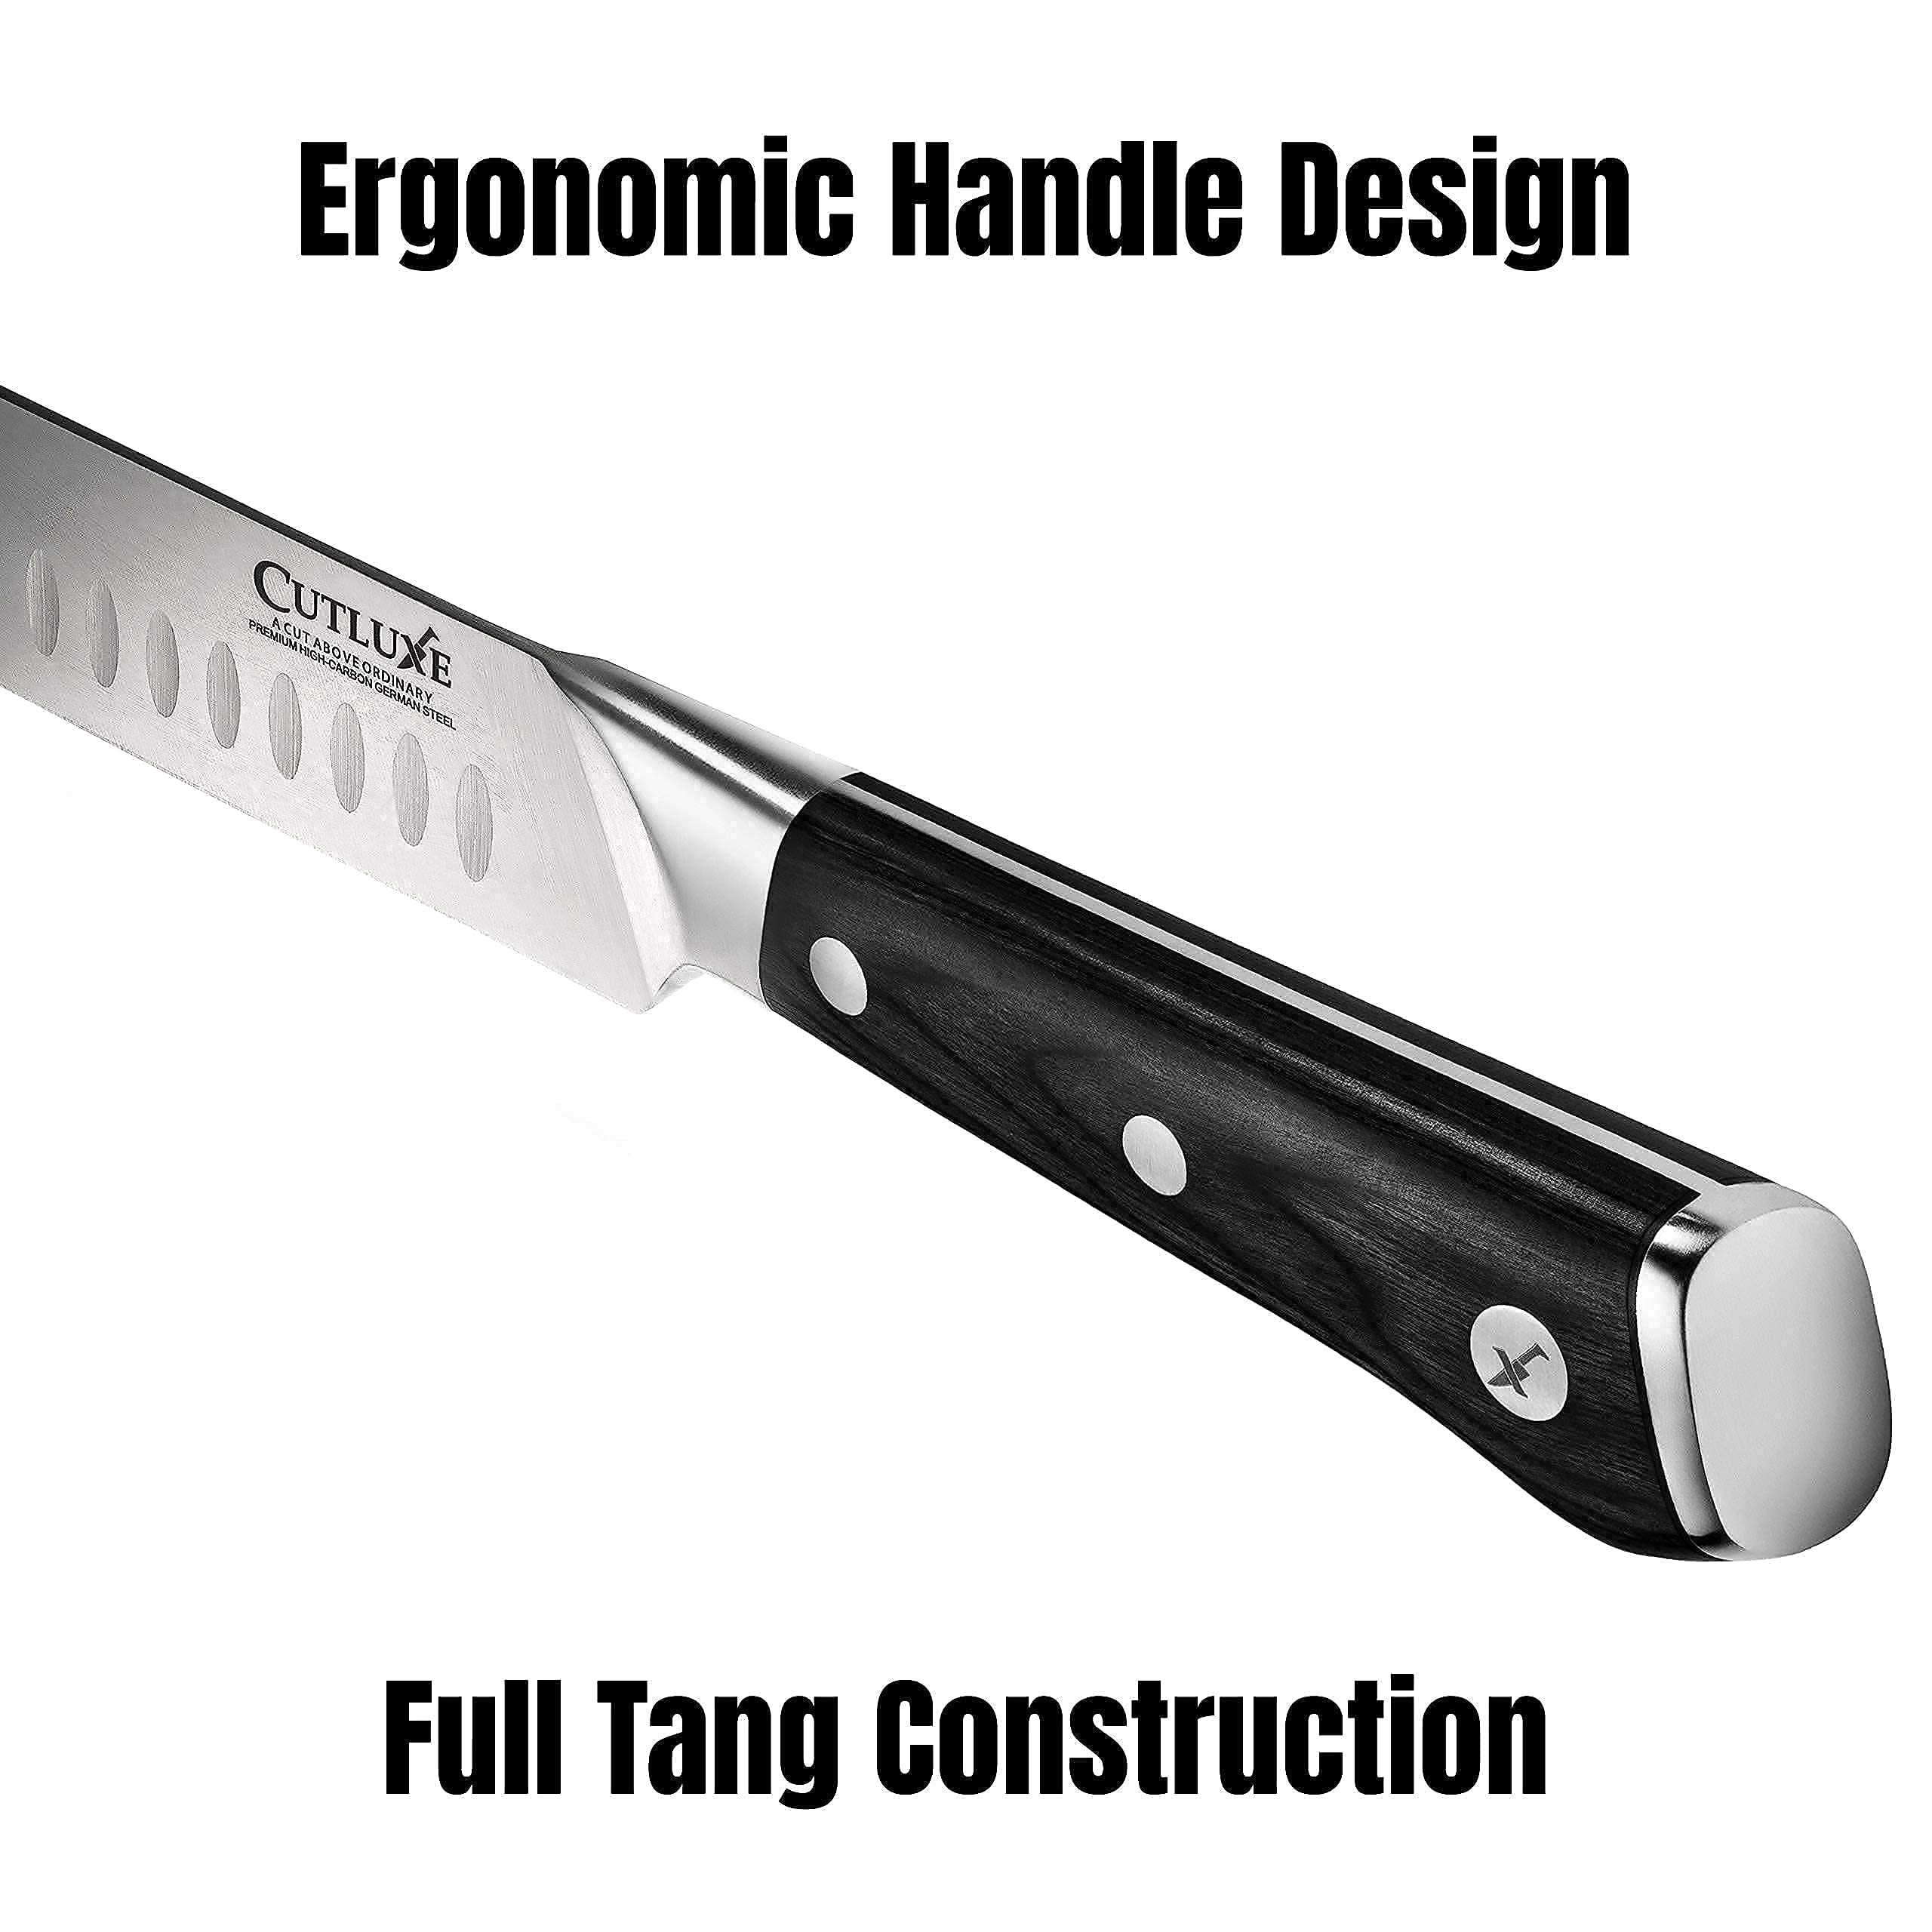 Cutluxe Slicing & Boning Knife Set – Forged High Carbon German Steel – Full Tang & Razor Sharp – Ergonomic Handle Design – Artisan Series